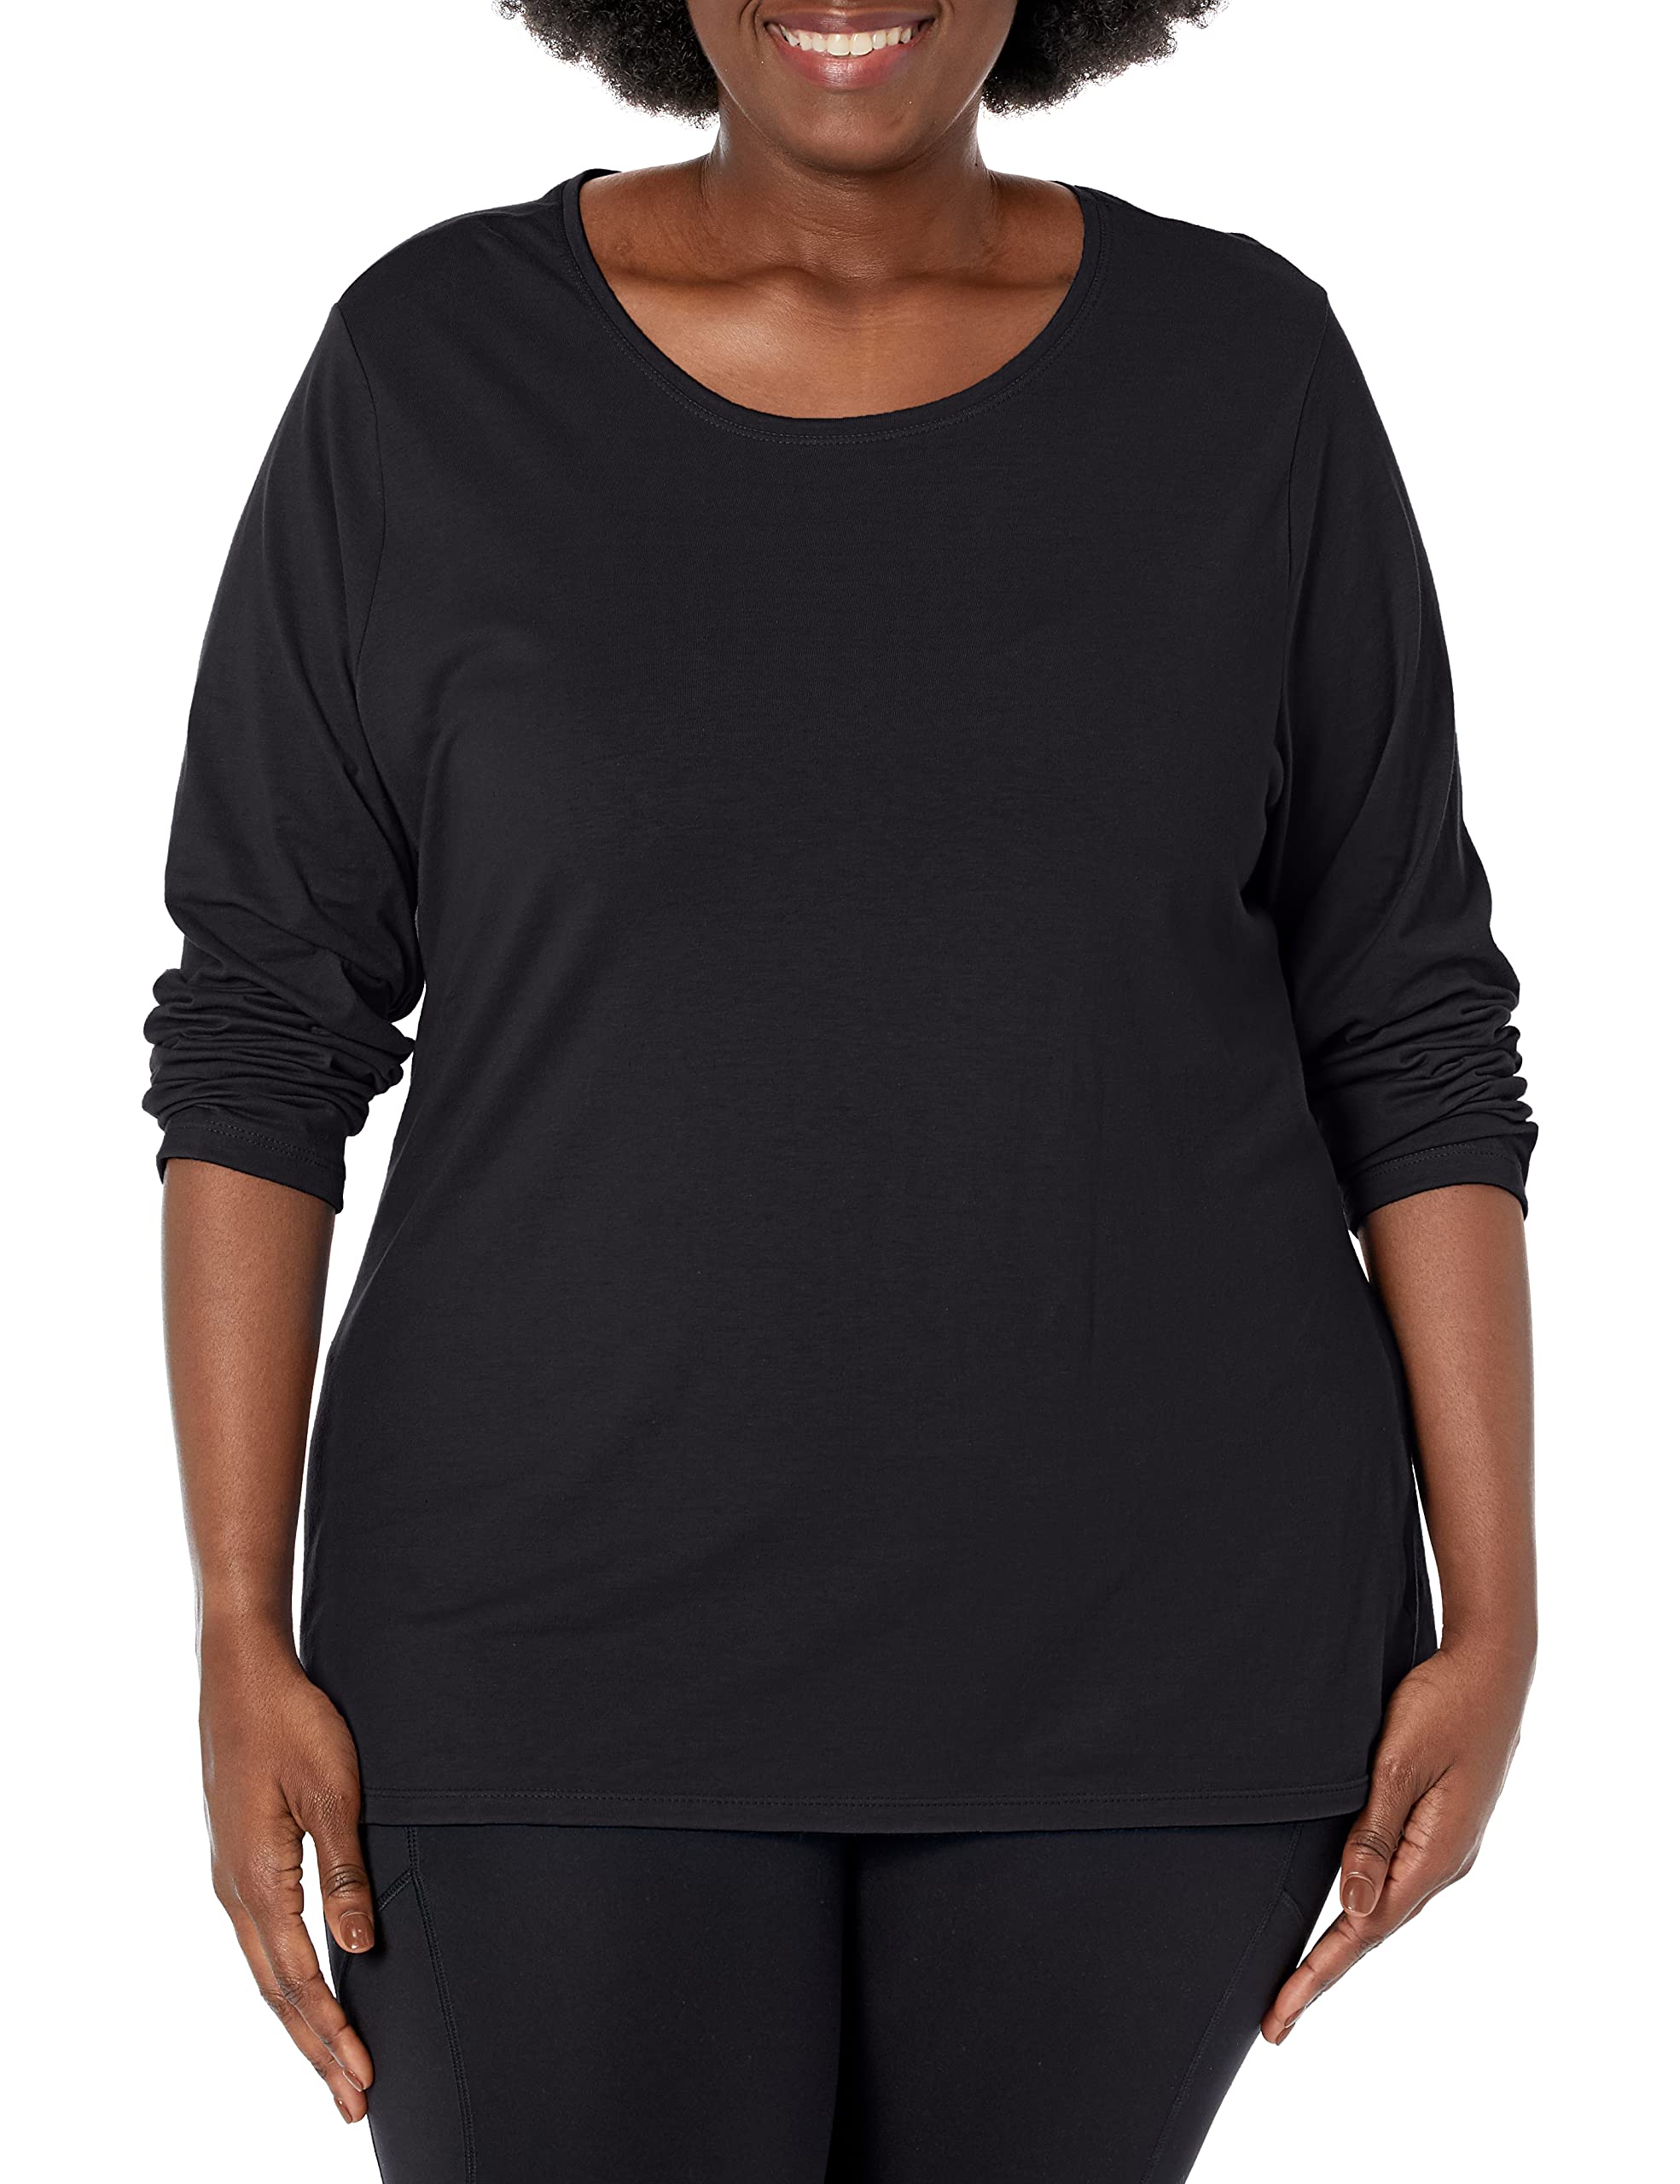 Just My Size Women's T-Shirt, Plus Size Long Sleeve Cotton Tee, JMS Plus Size Scoop-Neck T-Shirt for Women